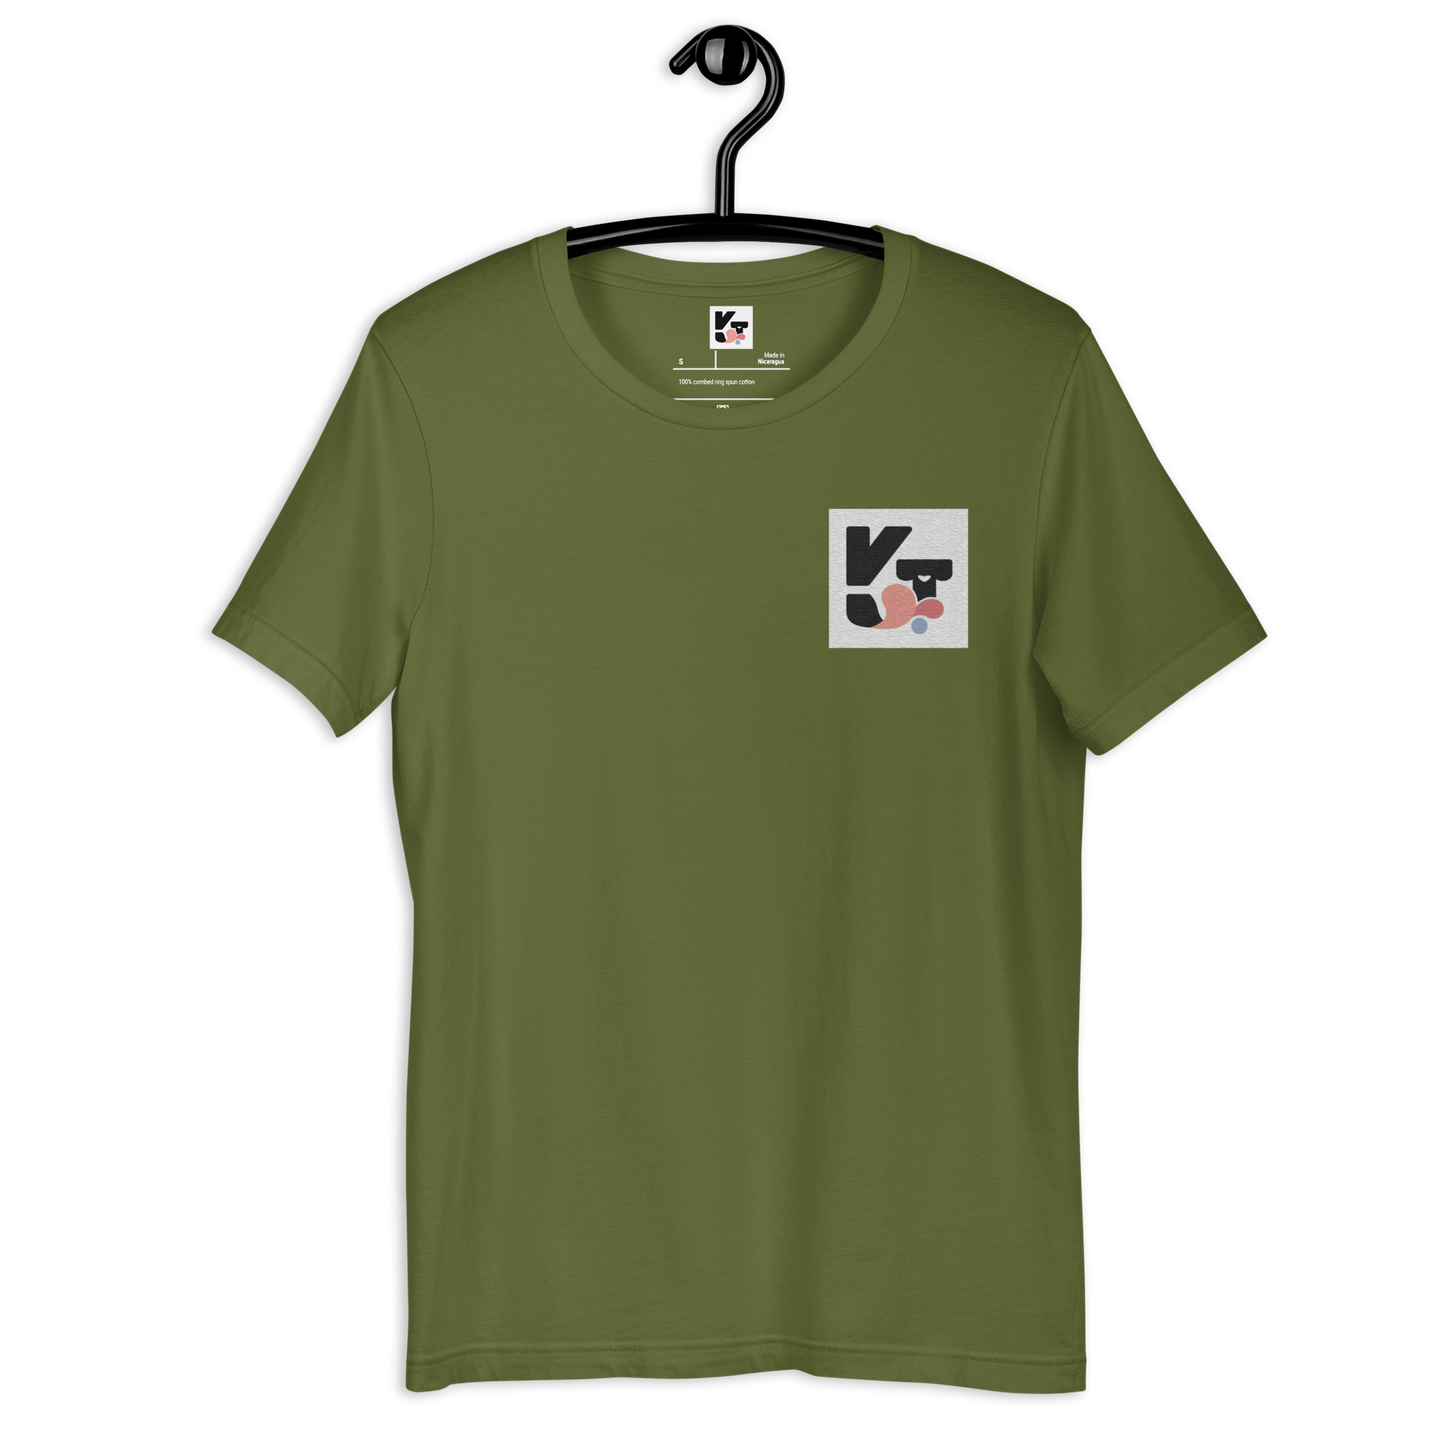 Unisex T-Shirt "Tunnel Border Collie"